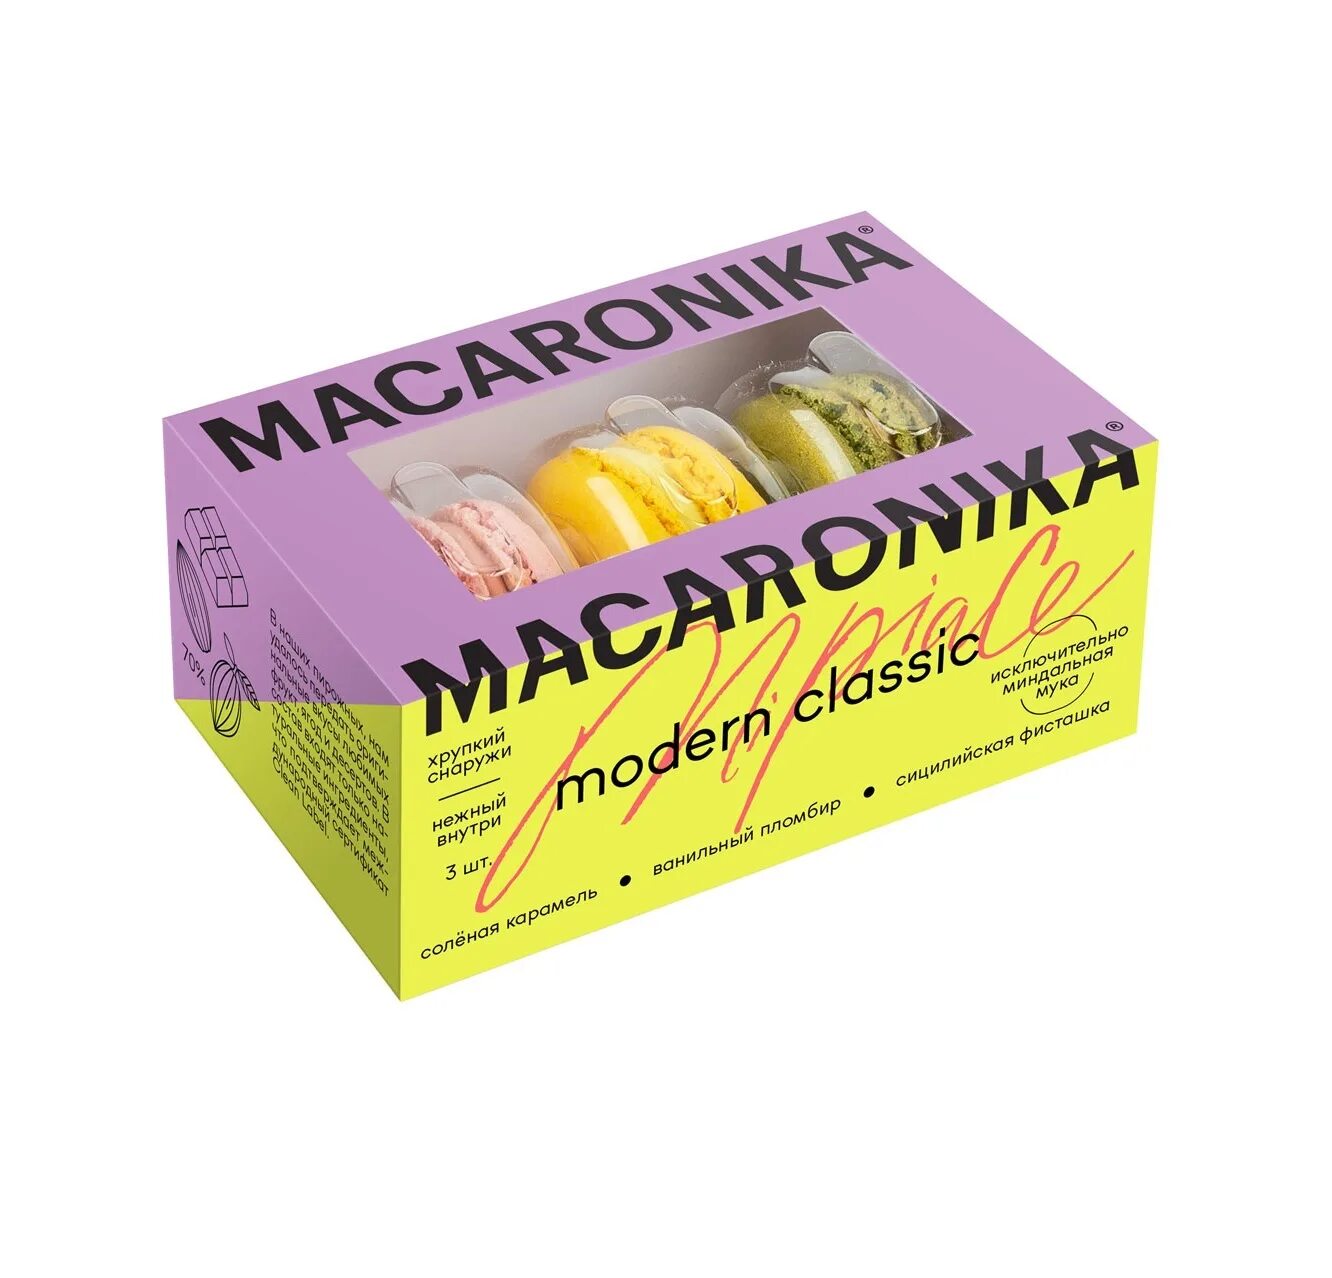 Макароника. Набор пироженных макароника. Macaronica вкусы. Макароника 3 шт. Набор пирожных макарон